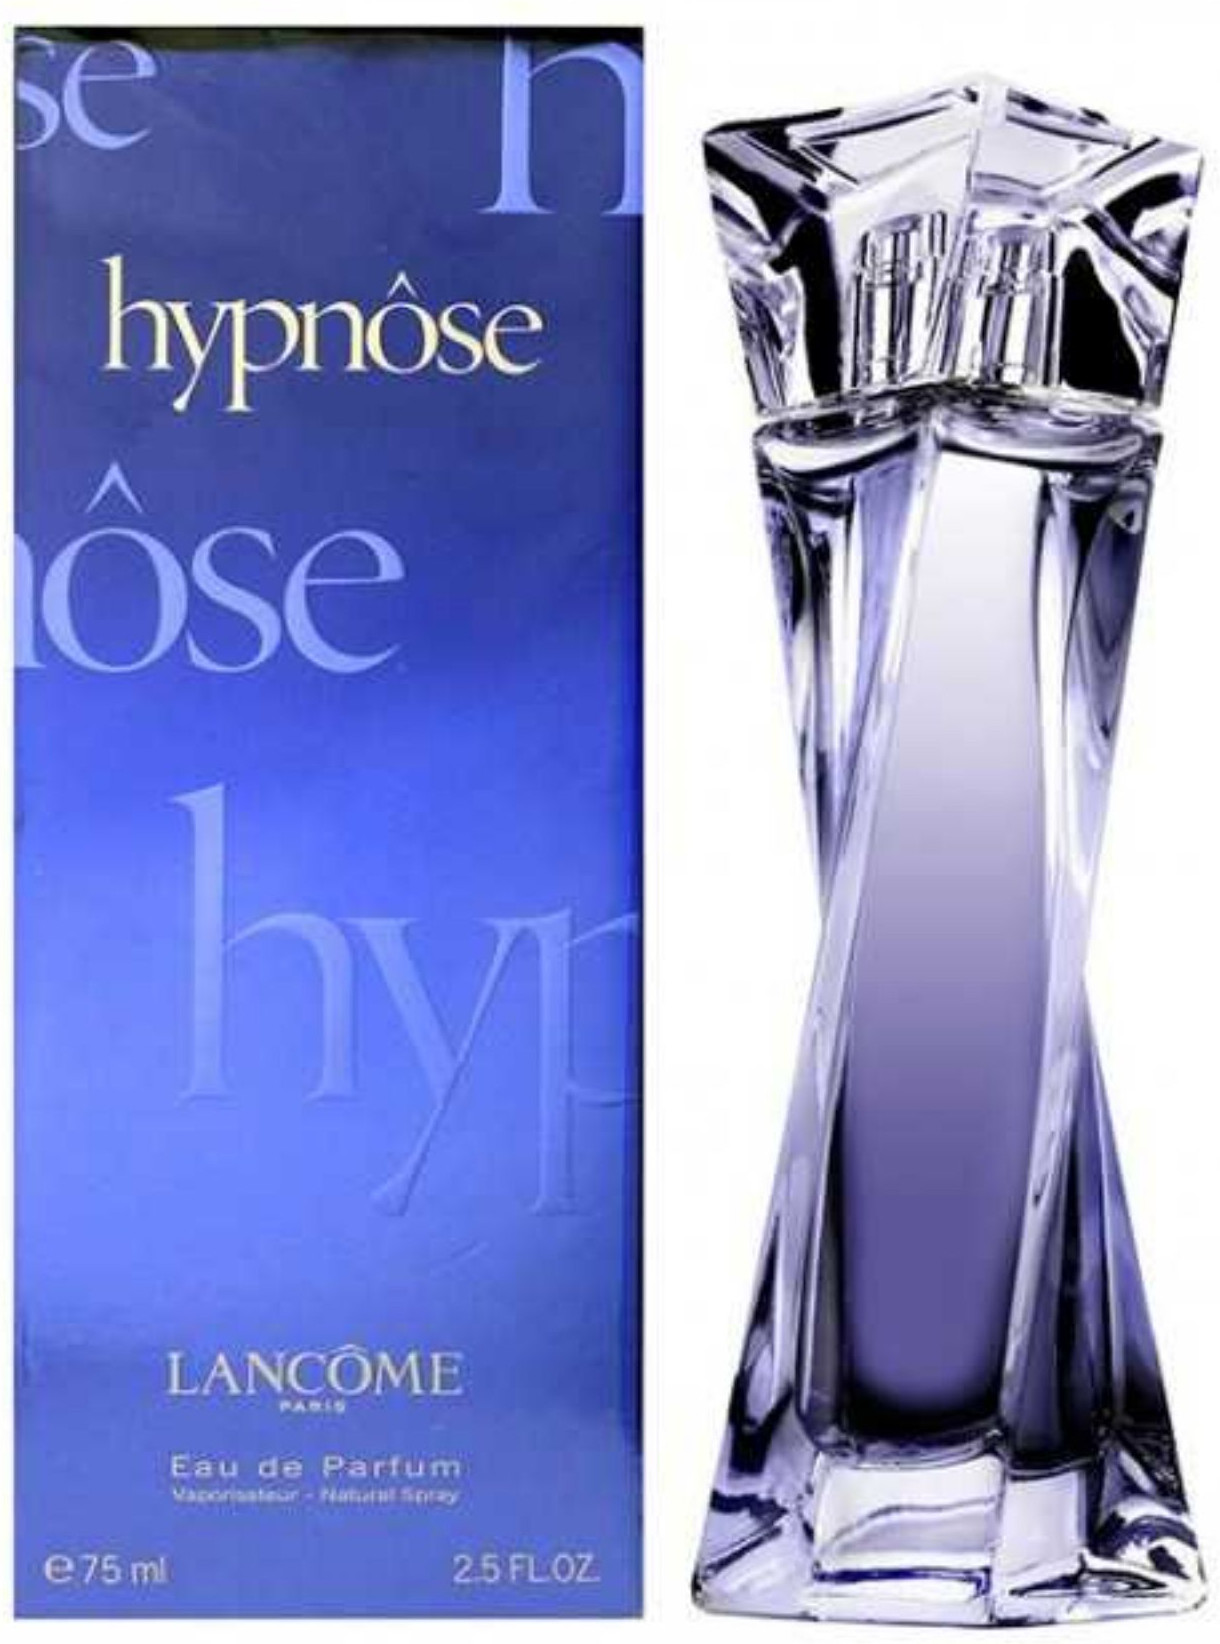 Lancome hypnose